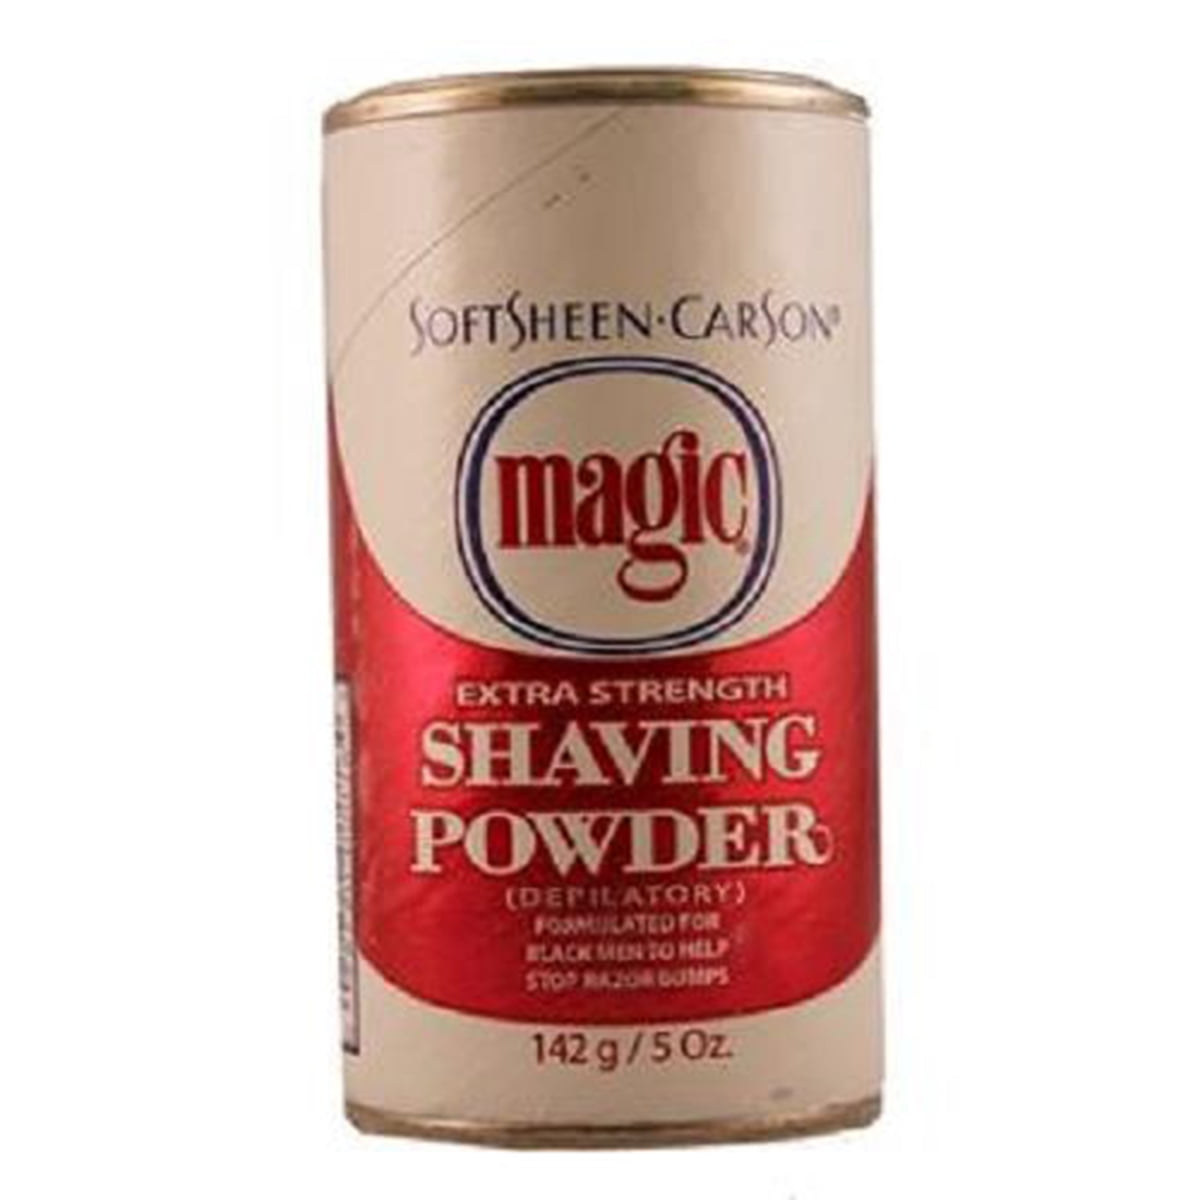 SoftSheenCarson Magic Extra Strength Shaving Powder, 5 oz